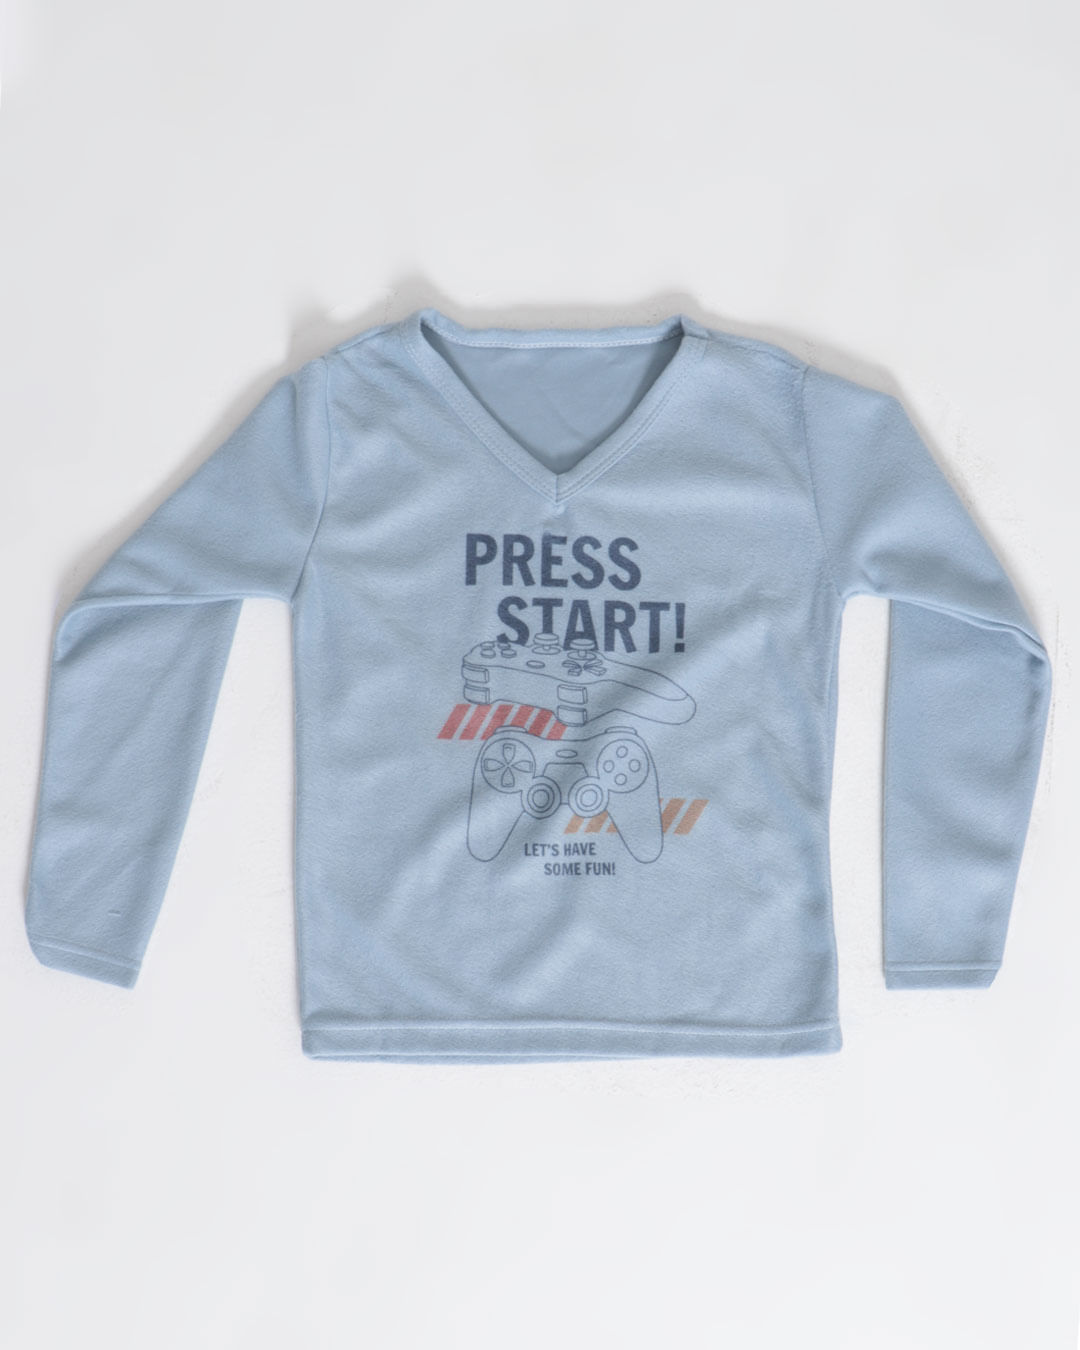 Pijama-Juvenil-Soft-Estampa-Press-Start-Cinza